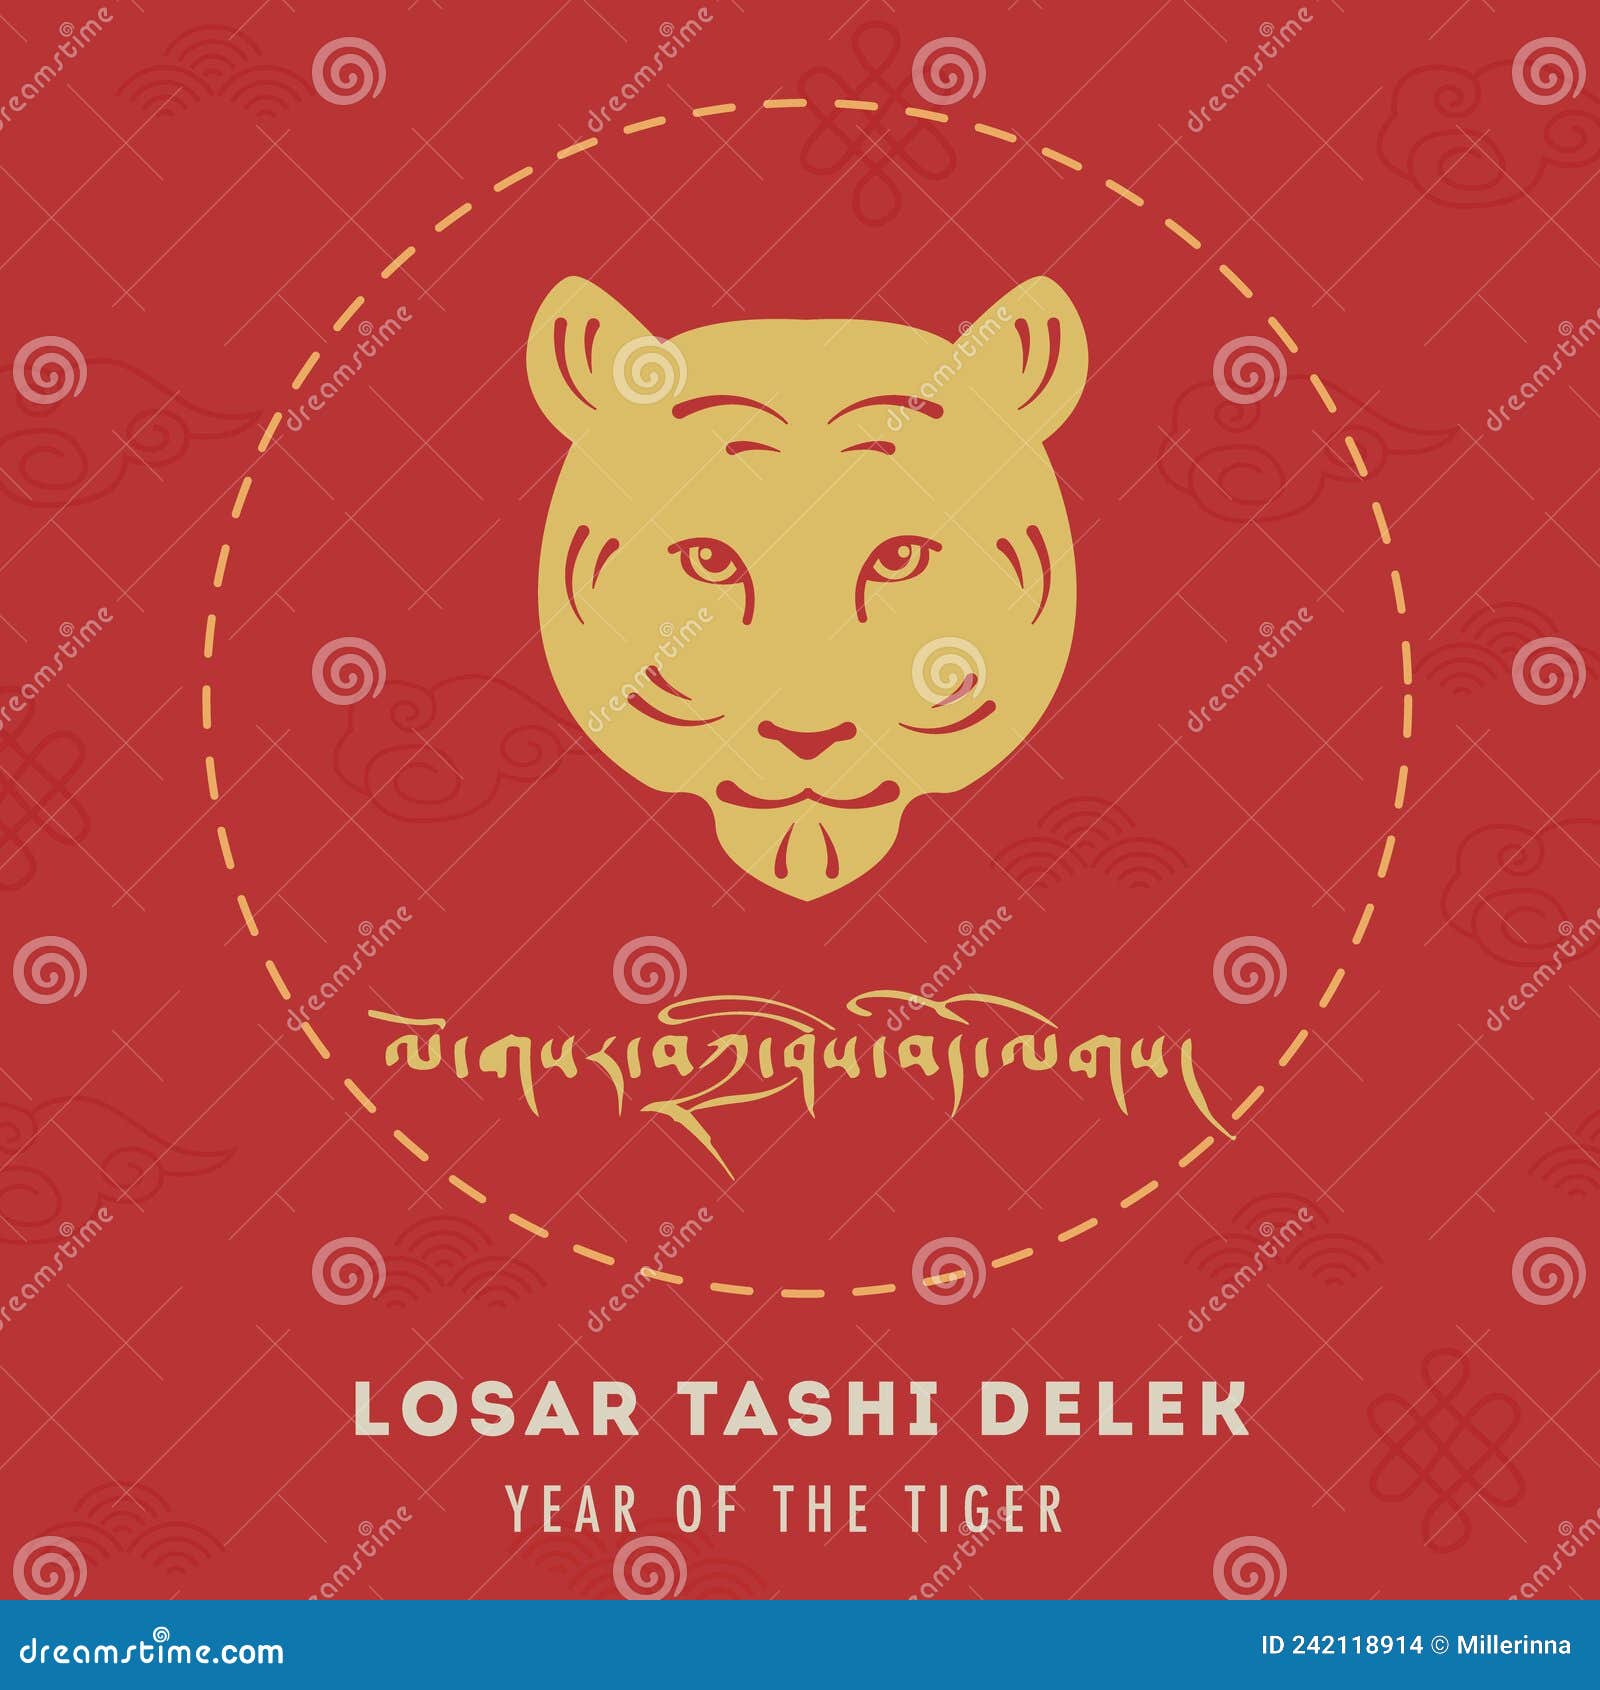 Losar Tashi Delek Greeting Card or Square Banner on Red Background. Year of  Tiger Astrological Animal Sign Stock Vector - Illustration of delek,  oriental: 242118914